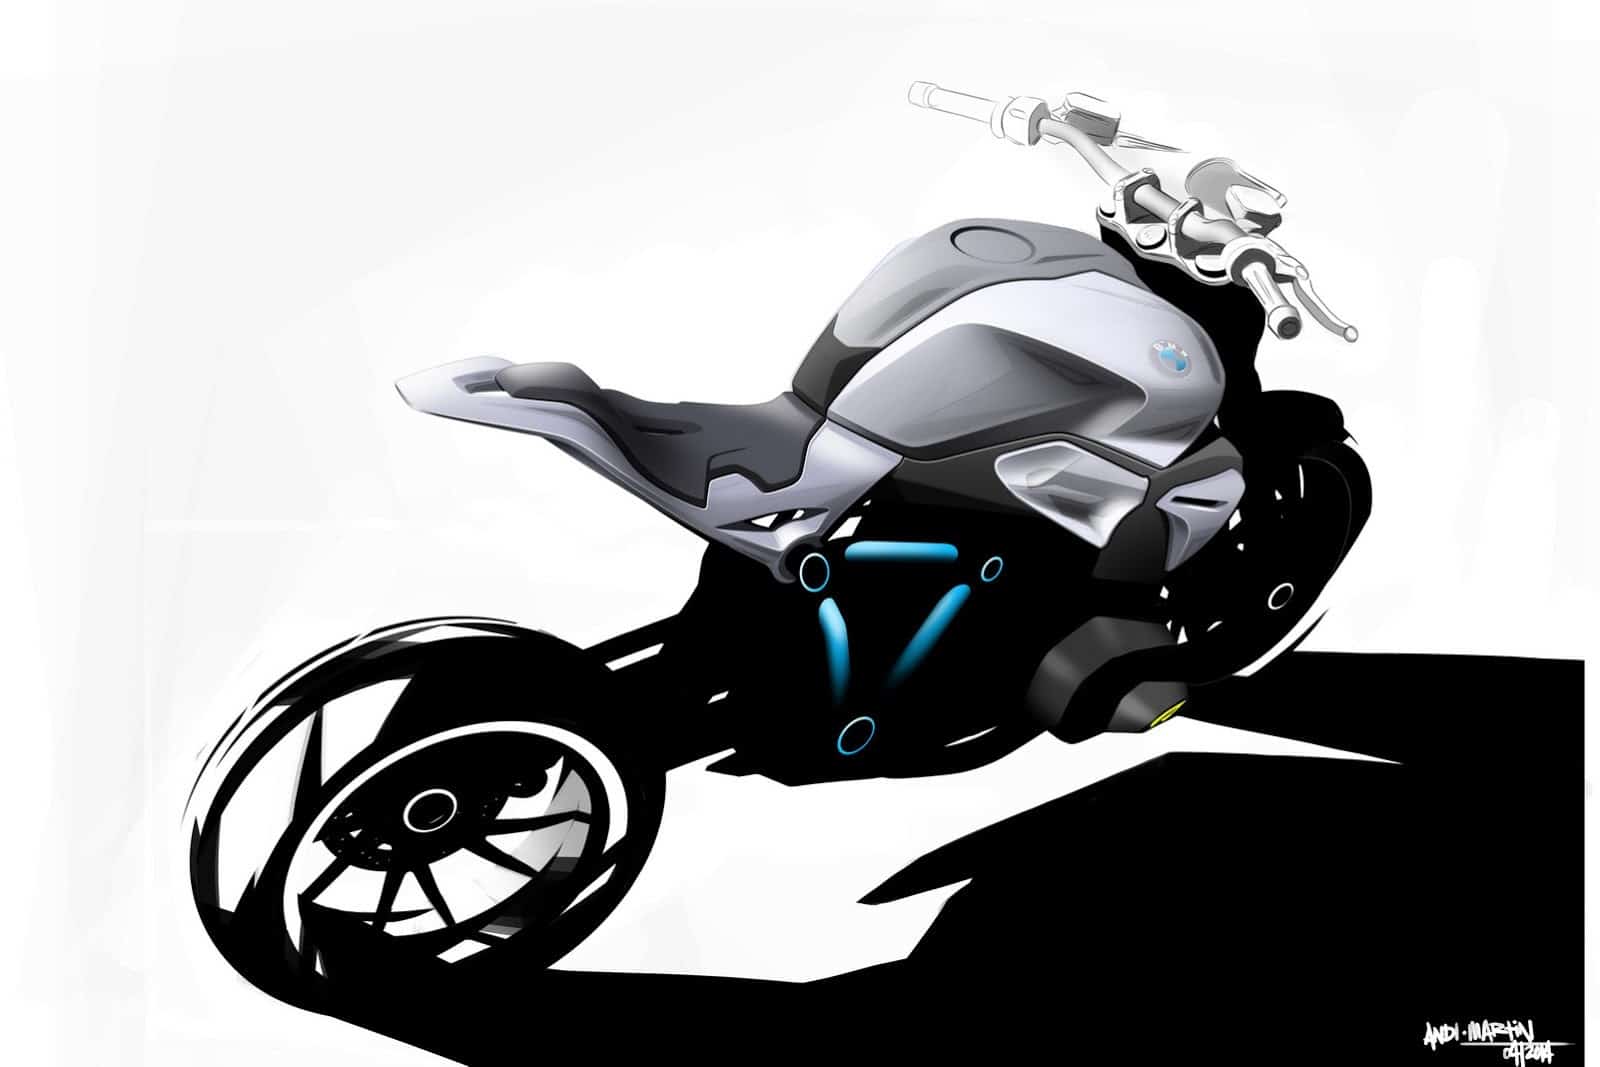 BMW-Motorrad-Concept-Roadster 23